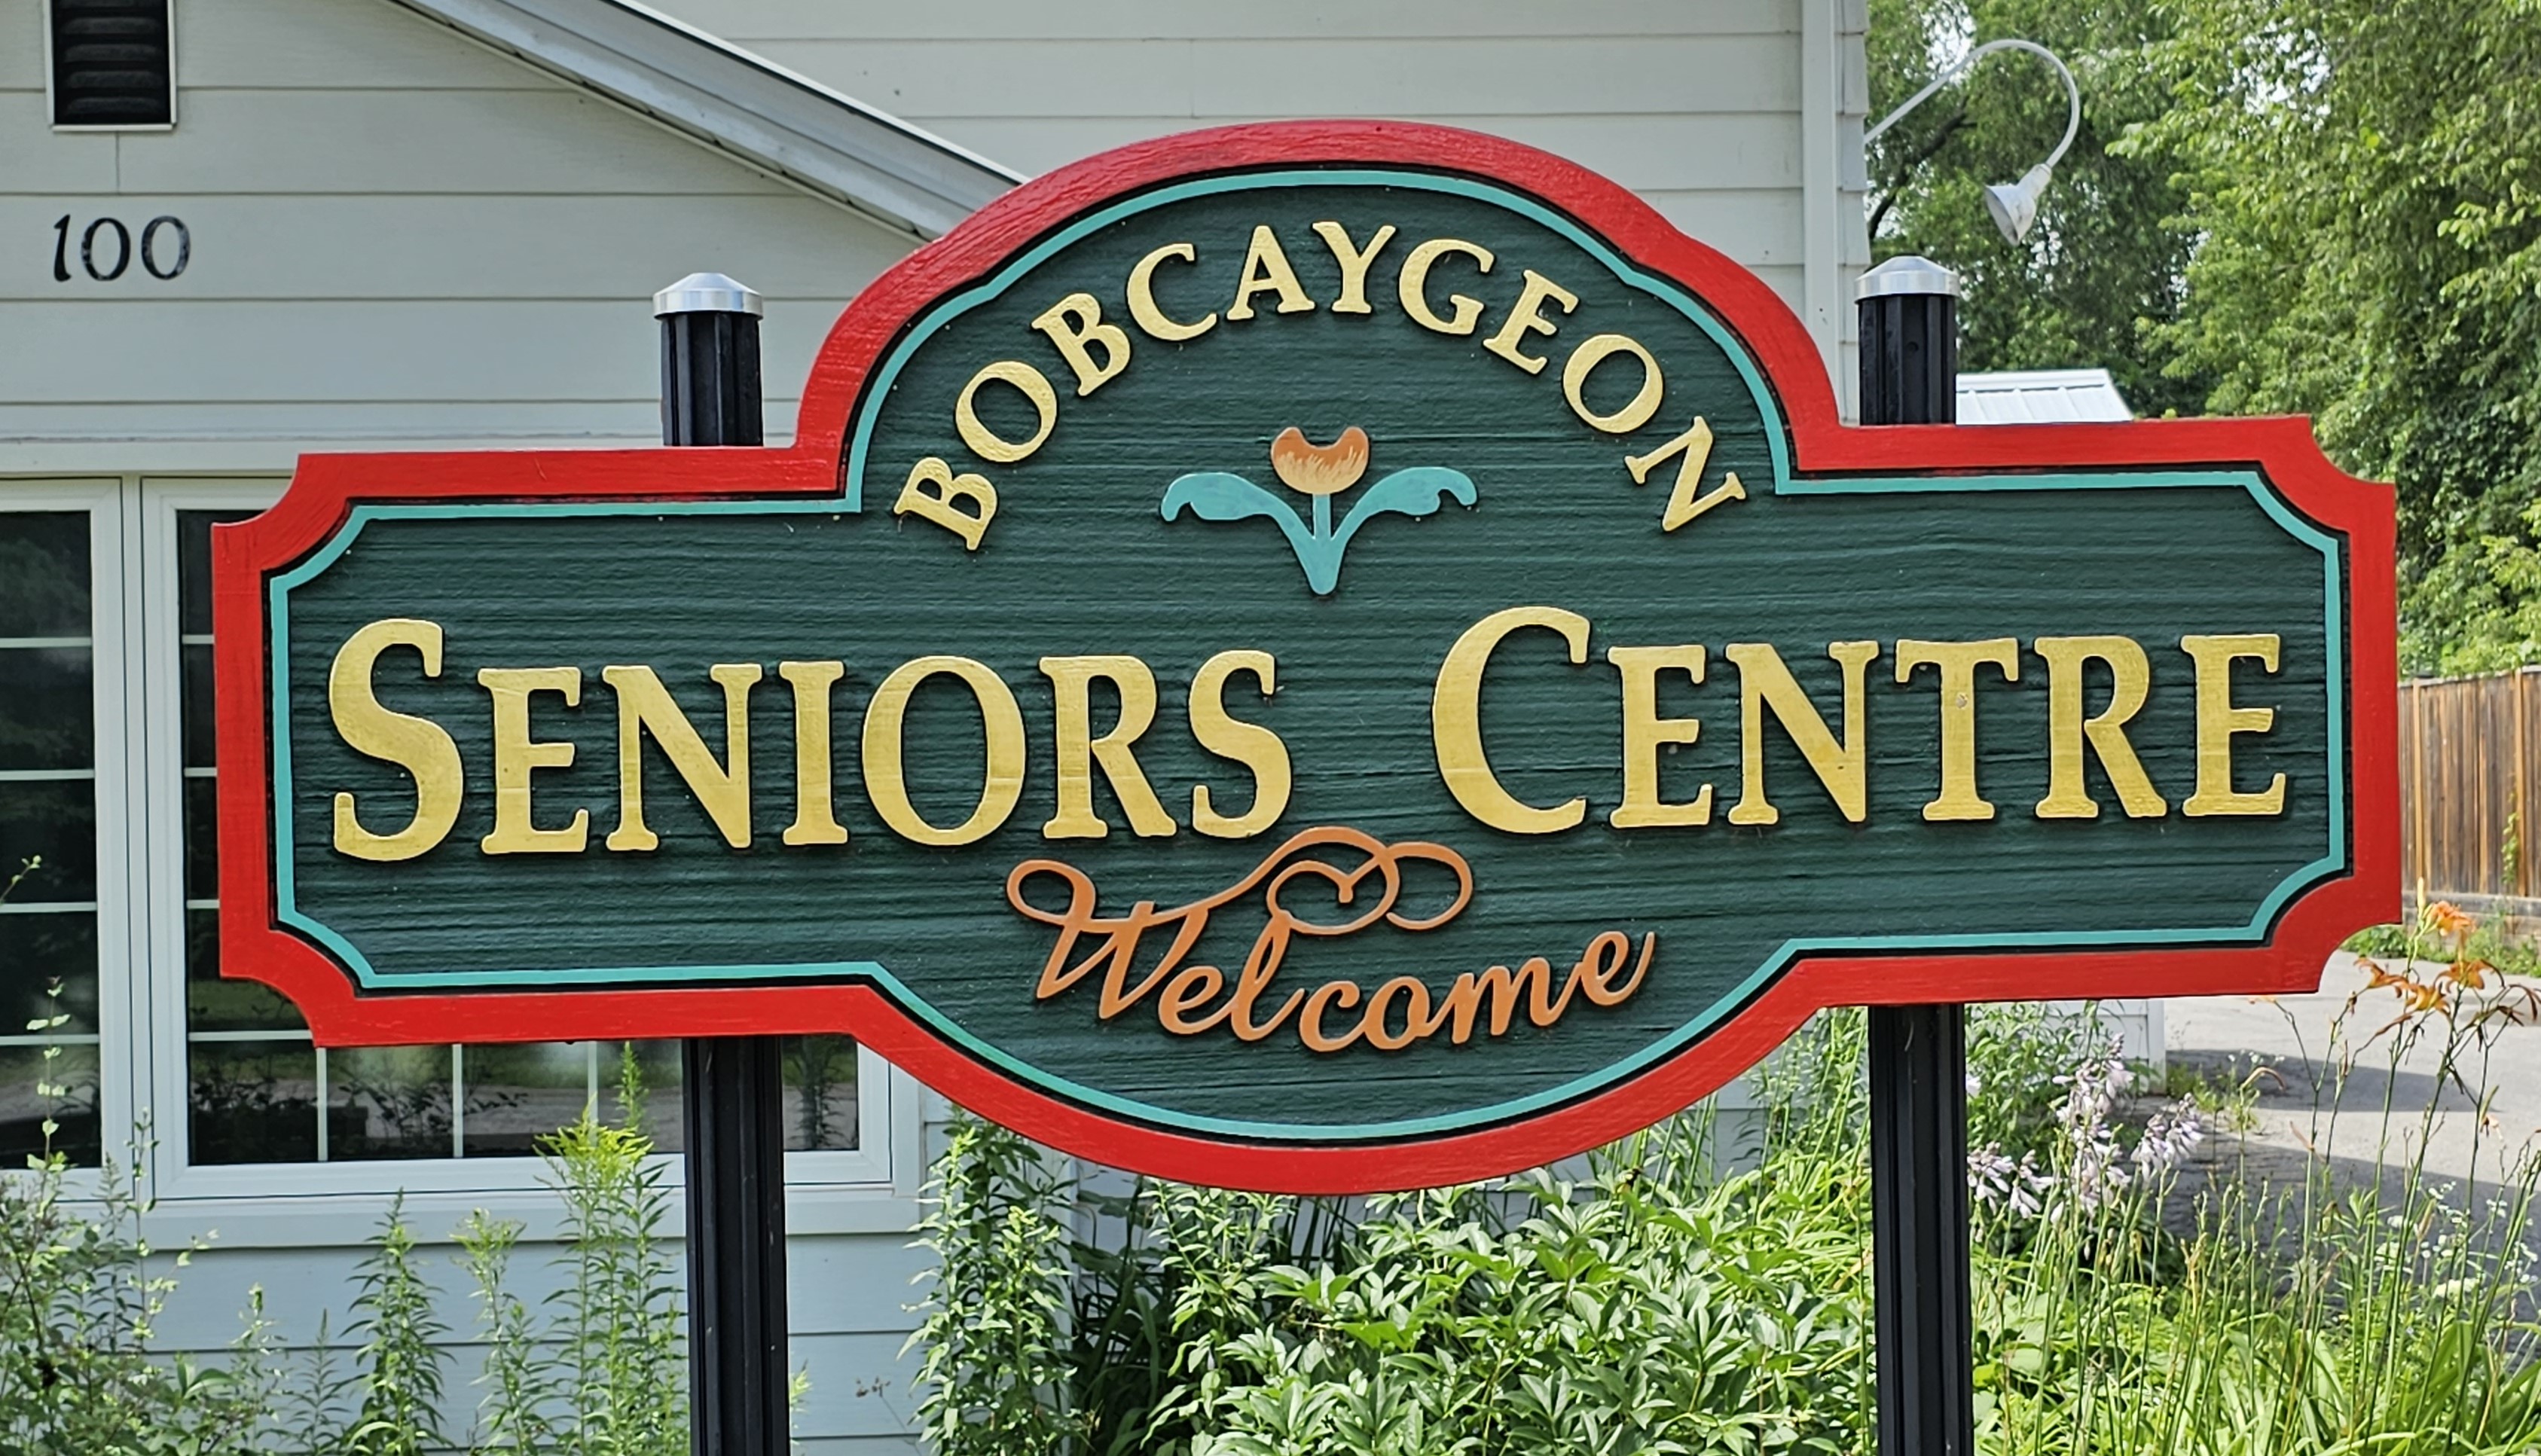 Zone 42 - Bobcaygeon Seniors